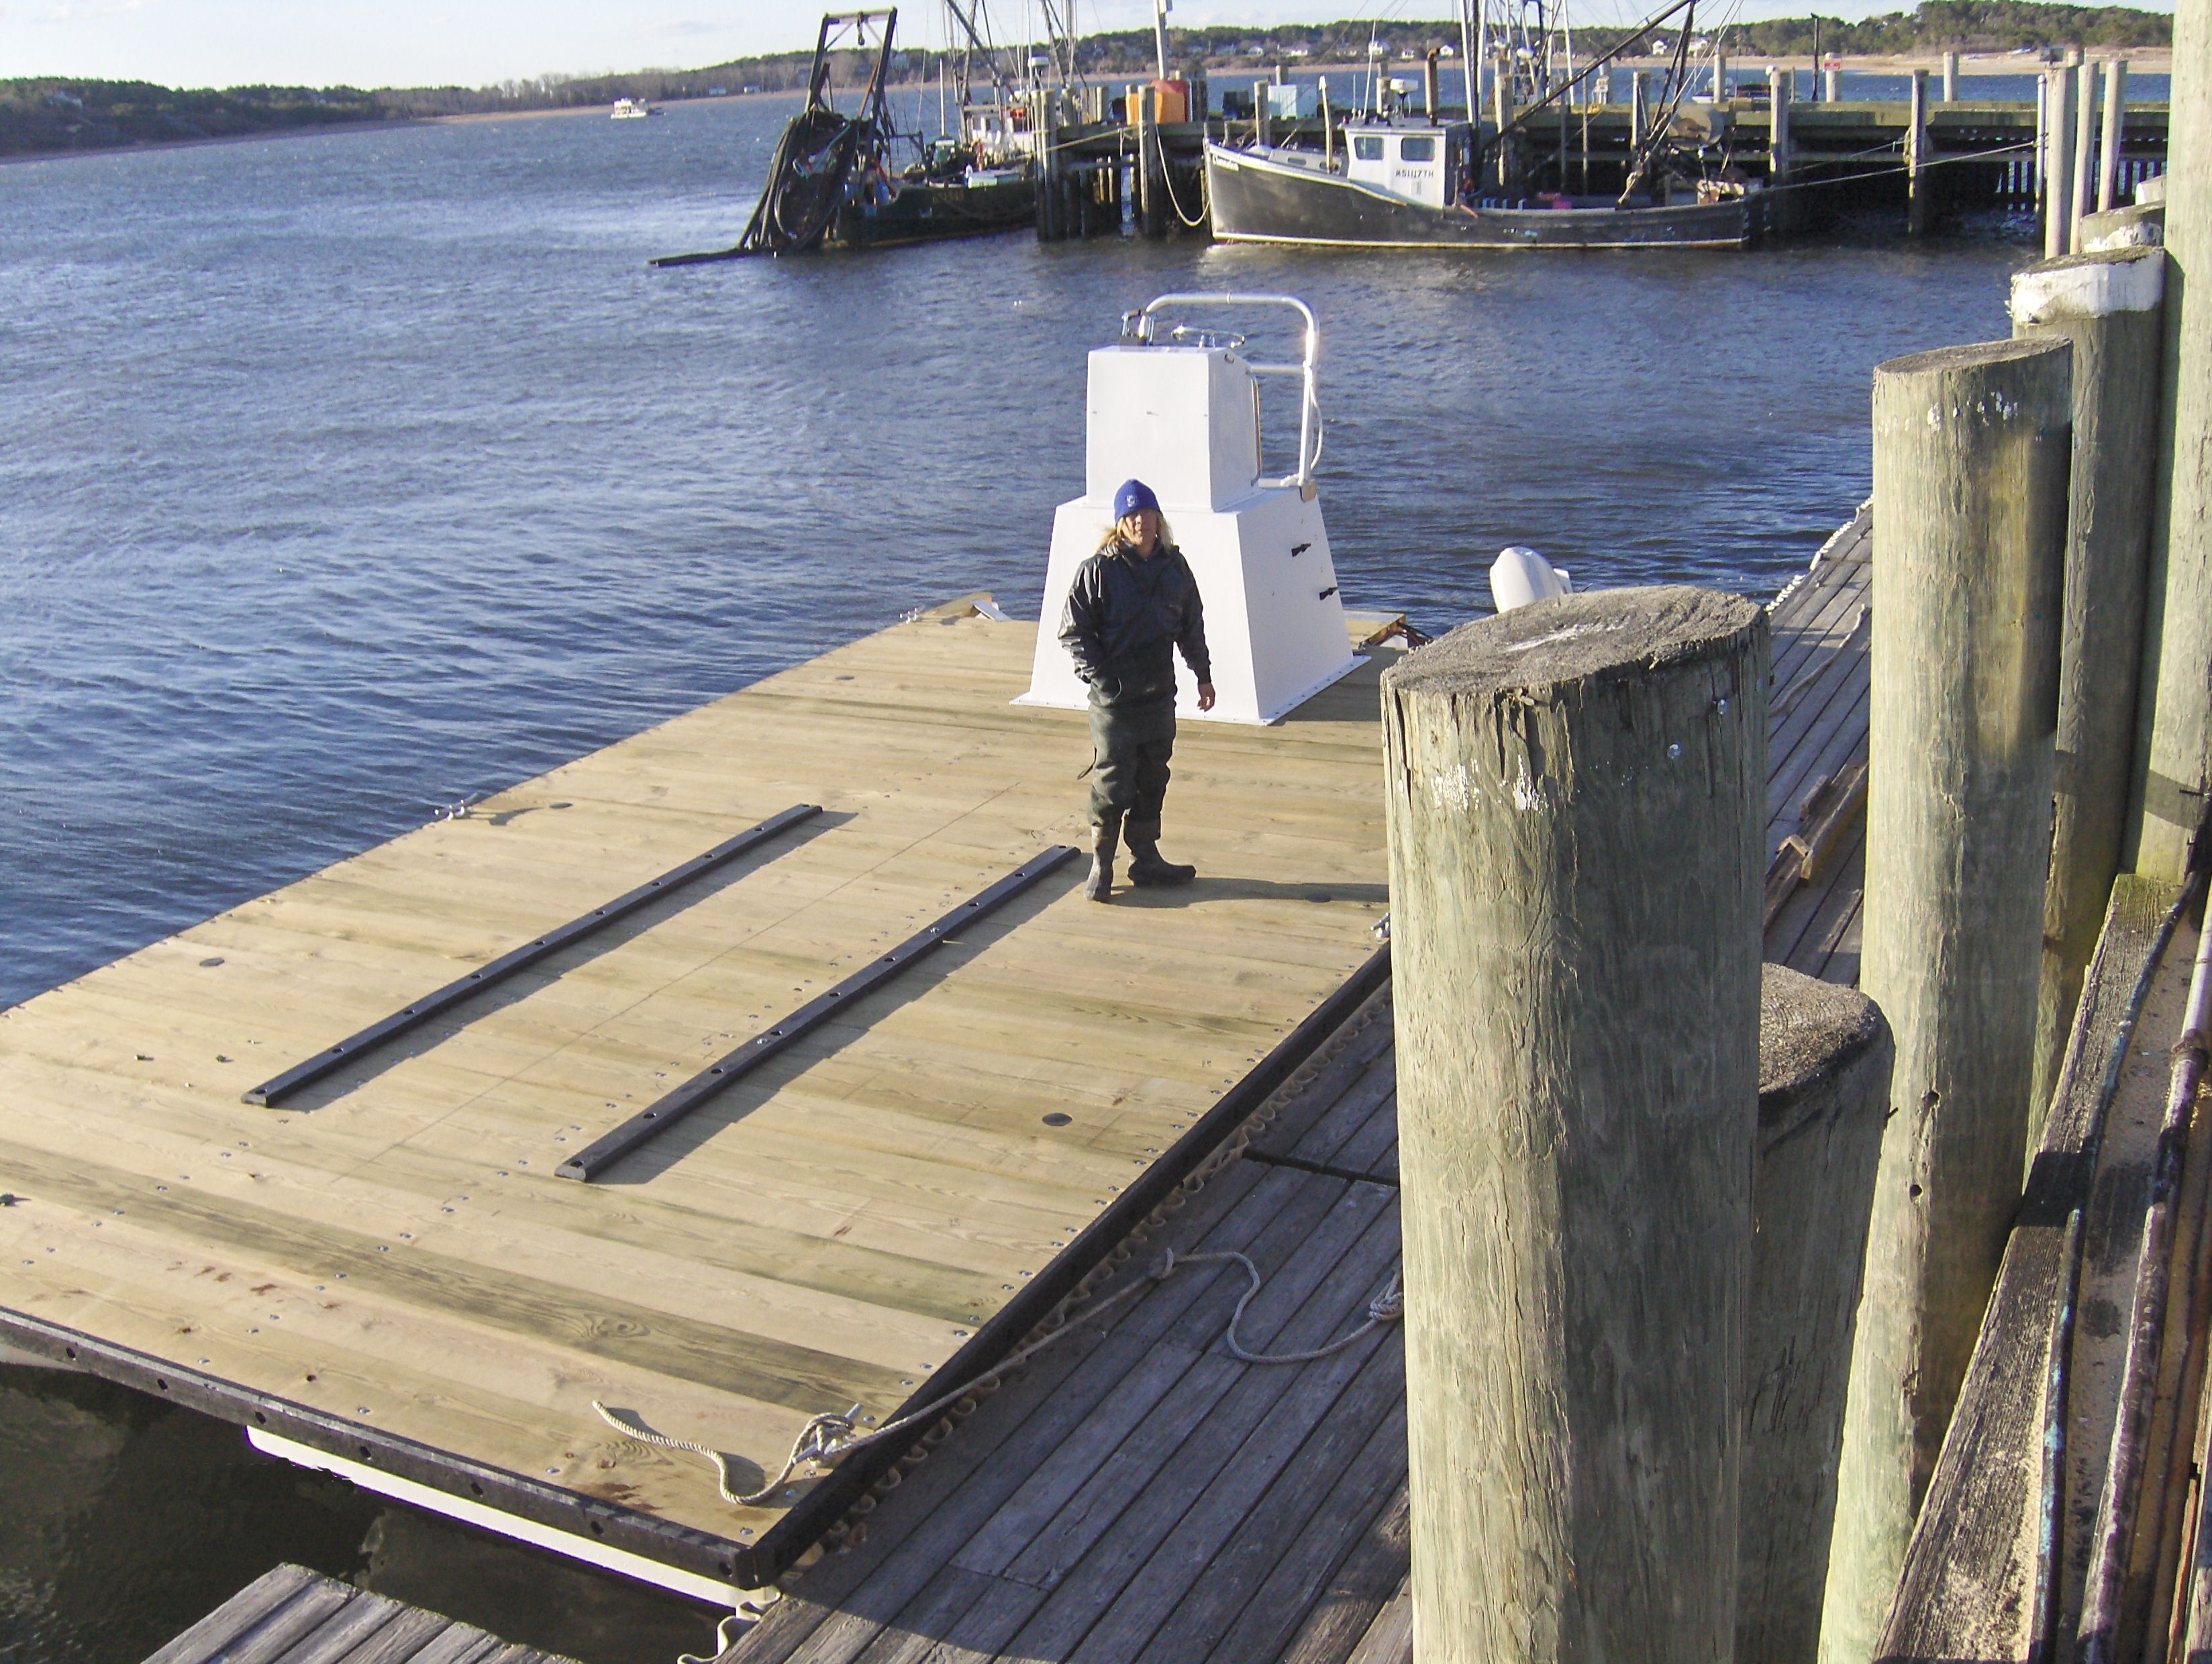 Deputy shellfish warden standing on barge in water